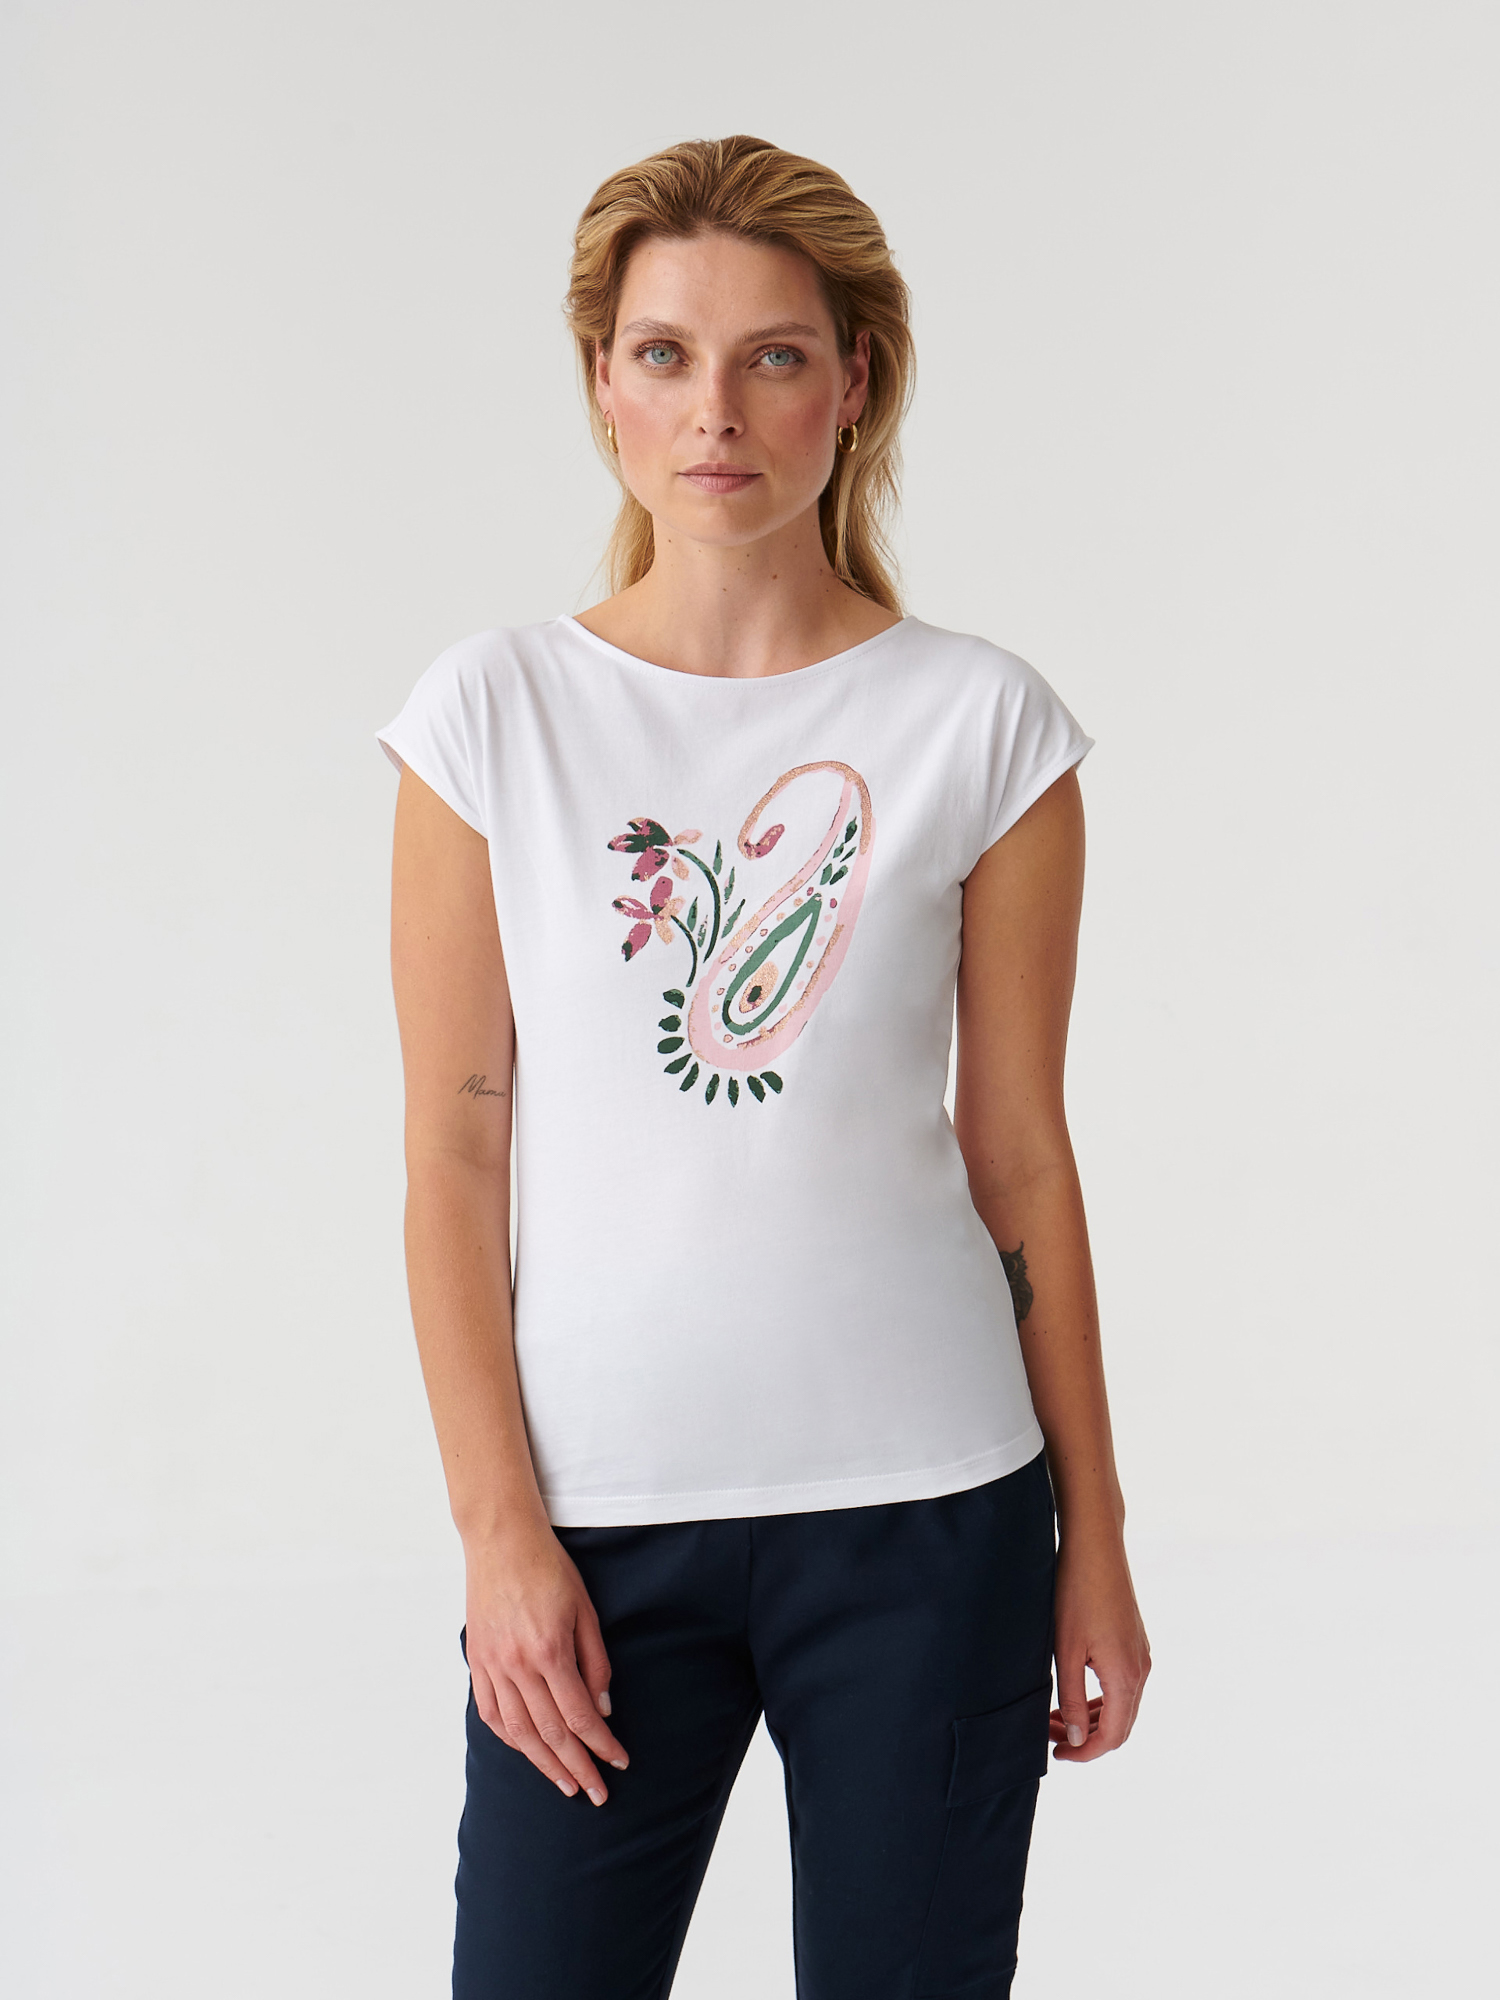 Tatuum ladies' T-shirt AMANDA 4